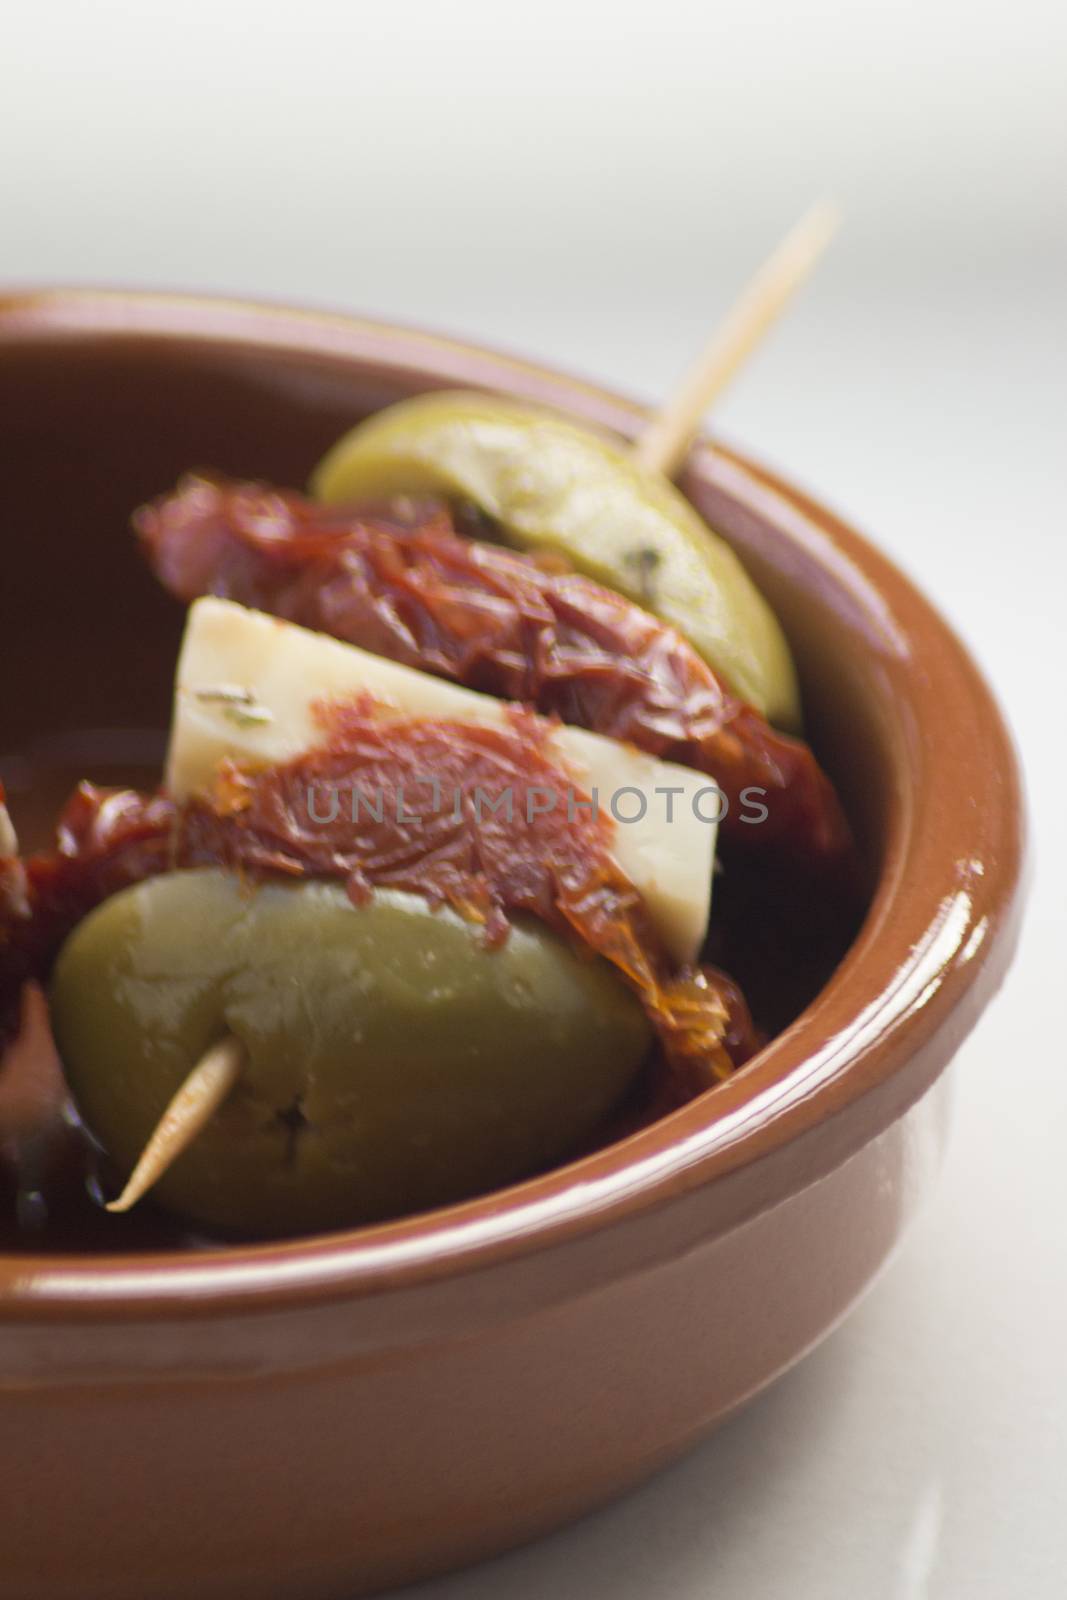 Green olives Spanish tapas bowl by edwardolive